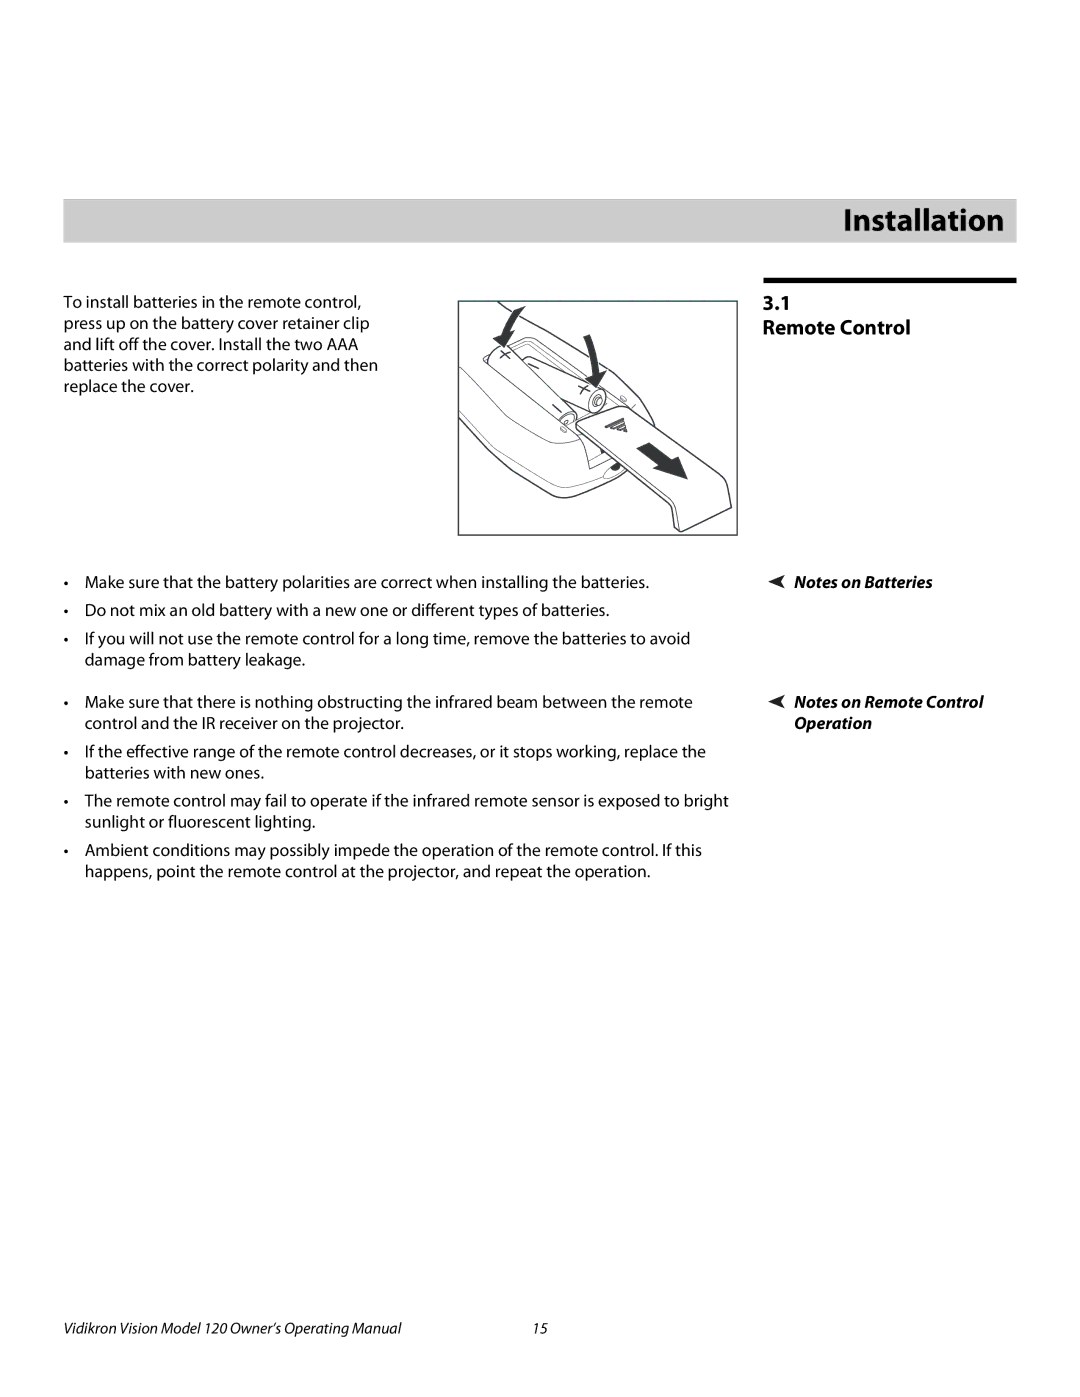 Vidikron v120 manual 3Installation, Remote Control, Operation 